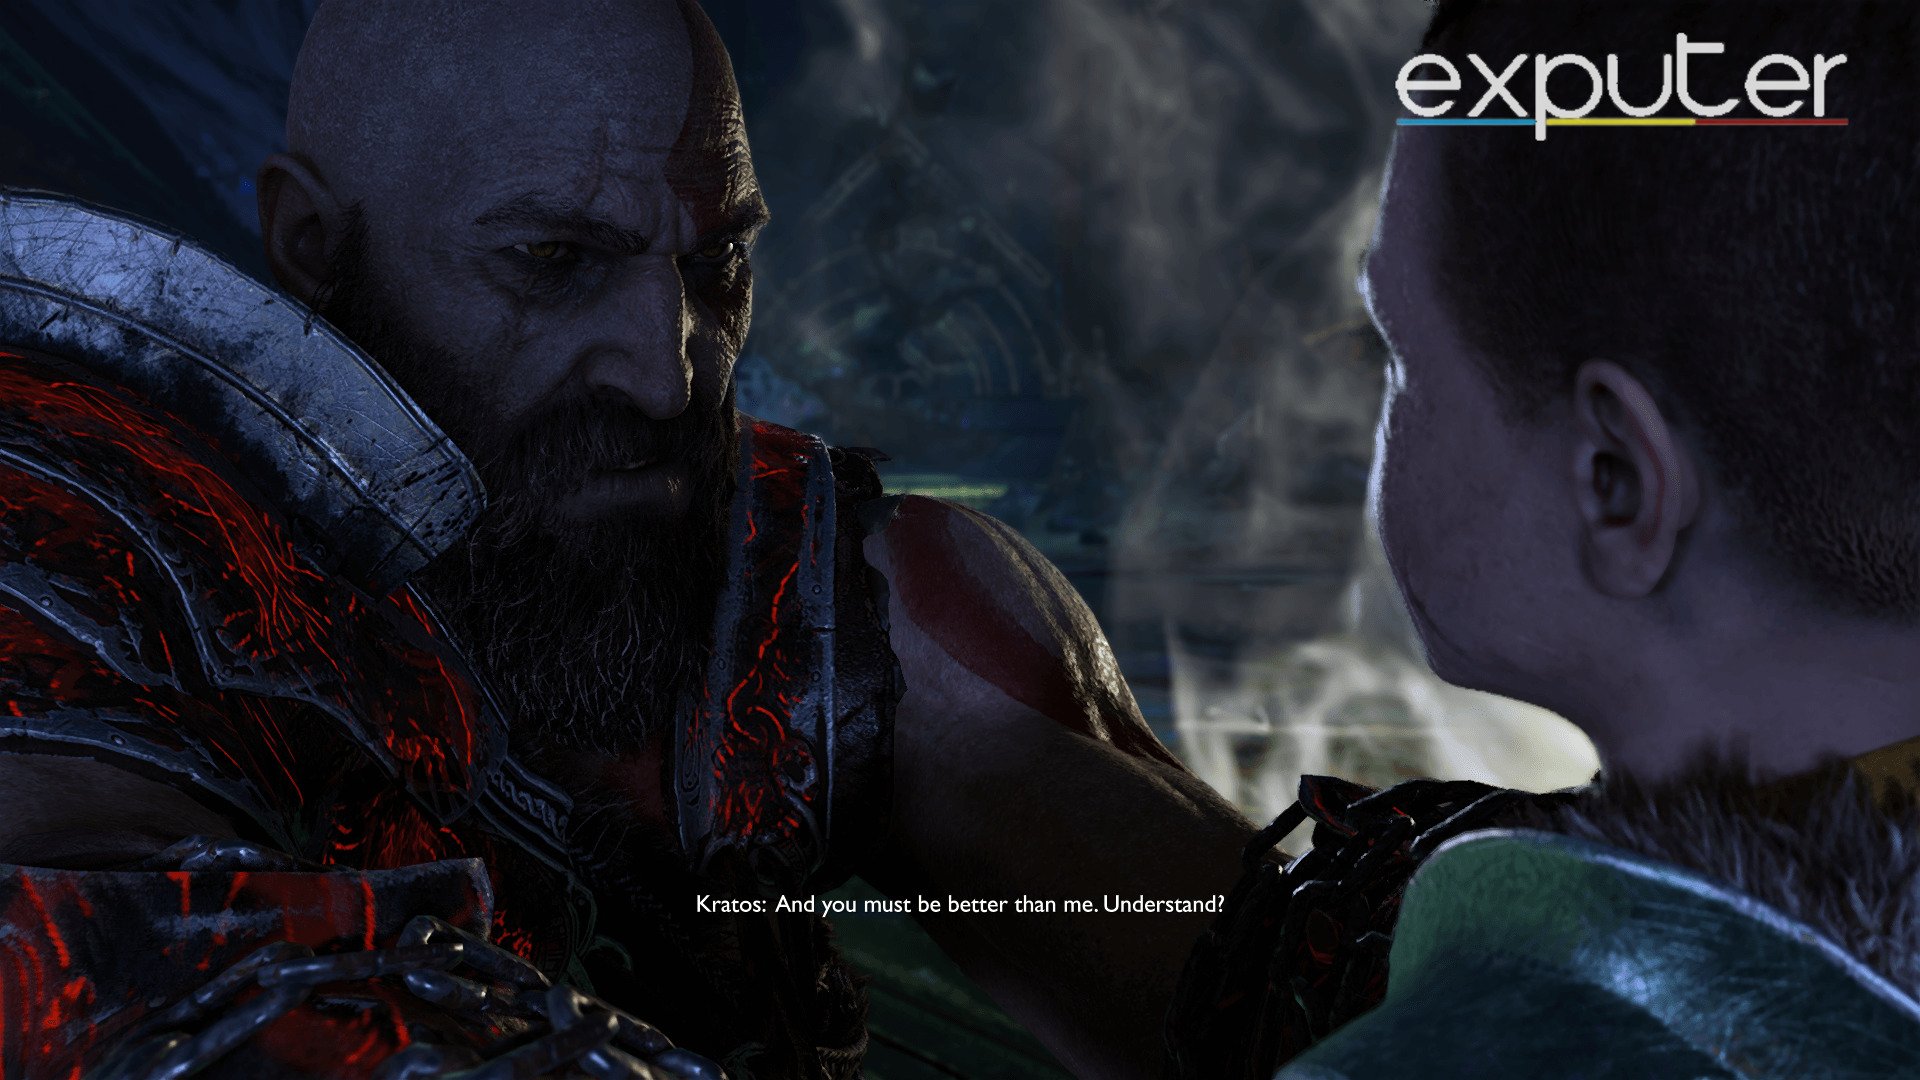 Kratos teaching Atreus to be better